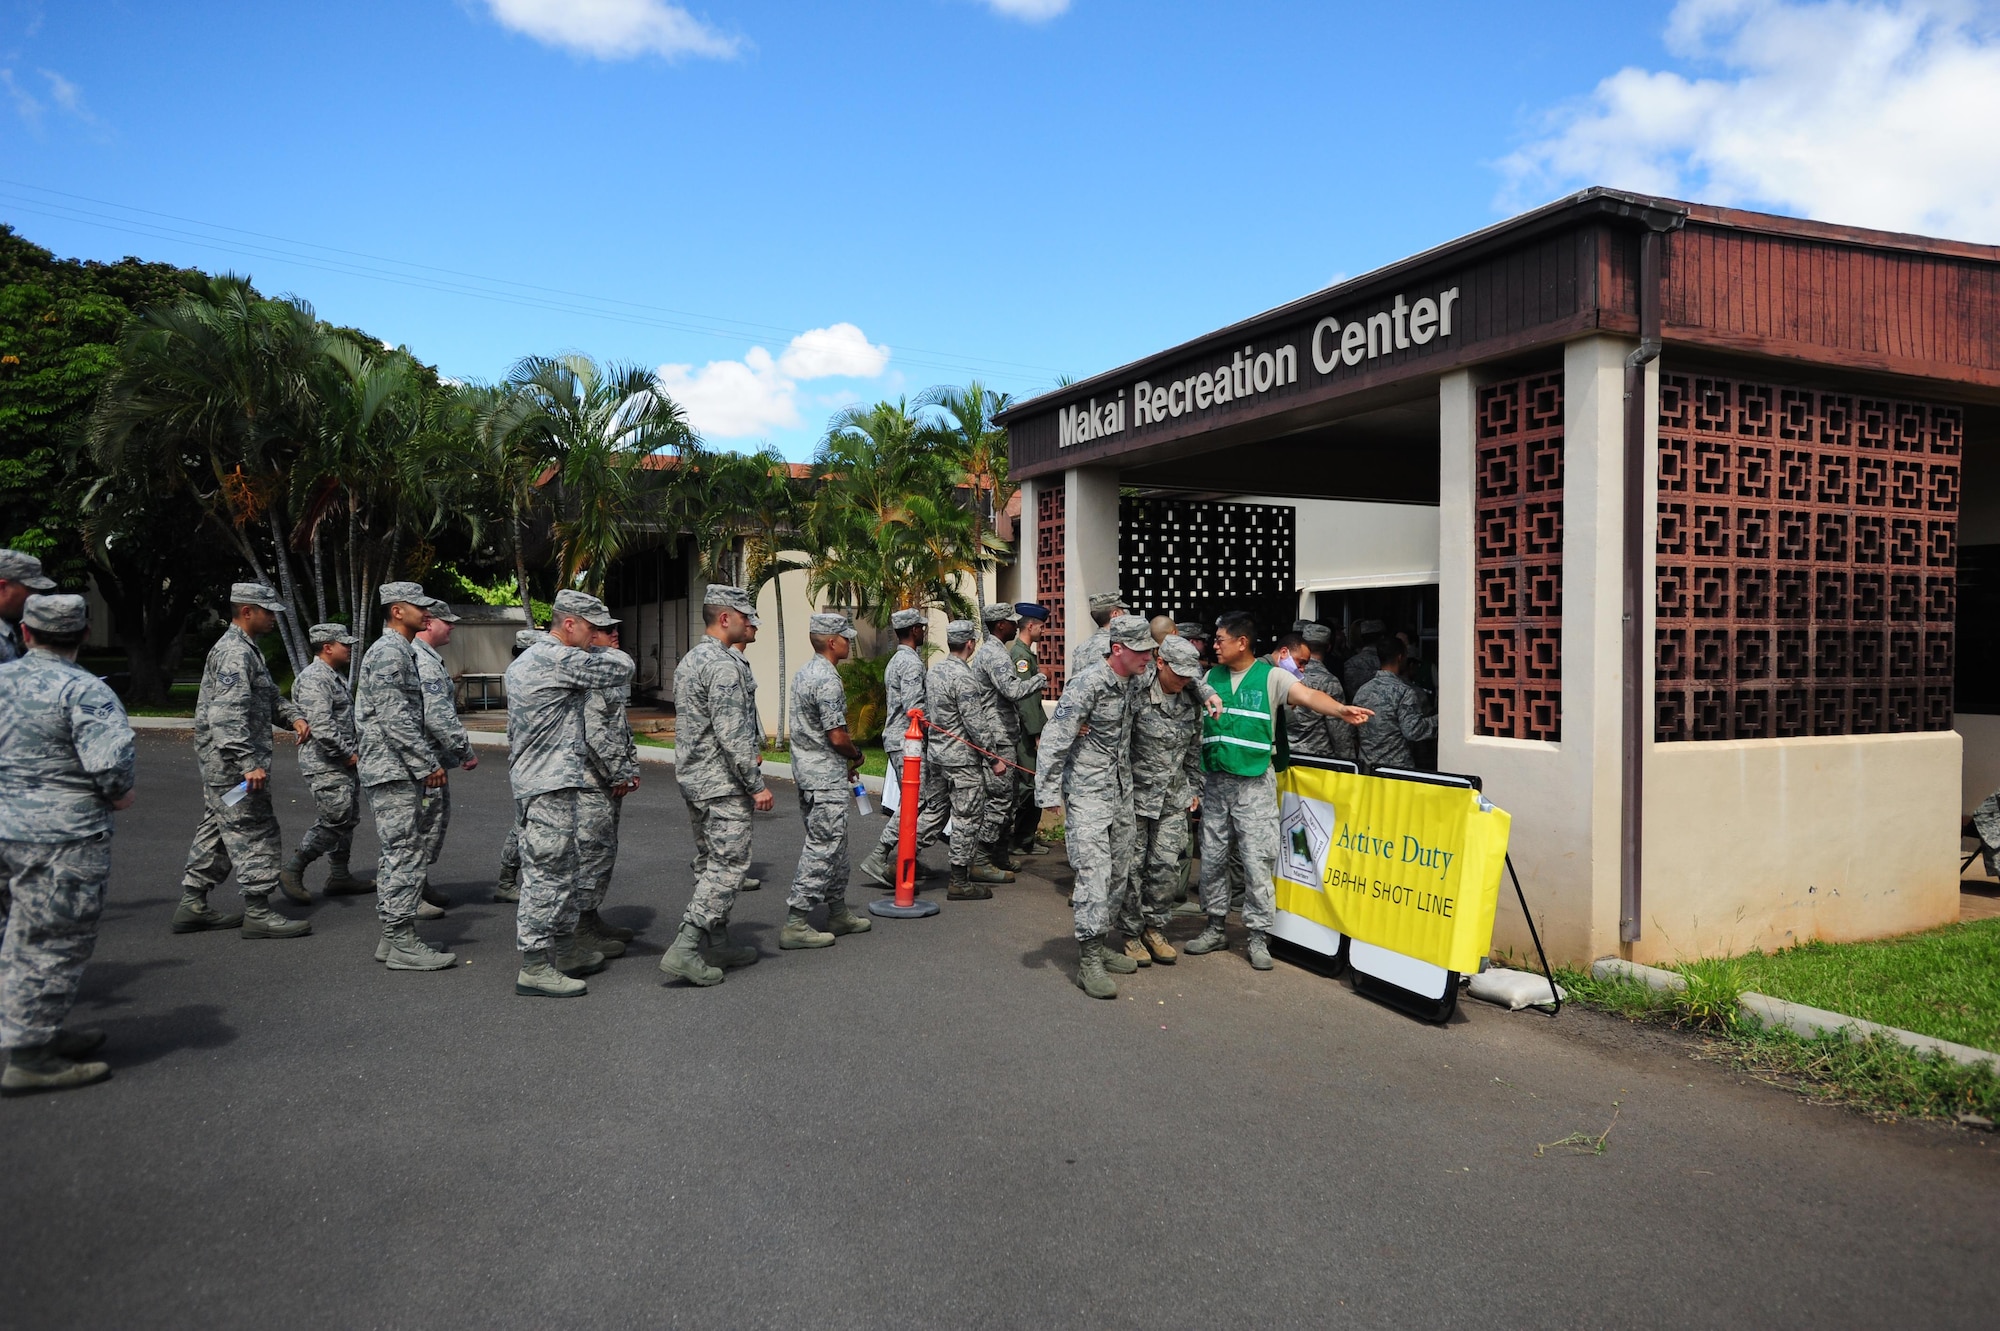 Airmen form a line before entering Makai Recreation Center.